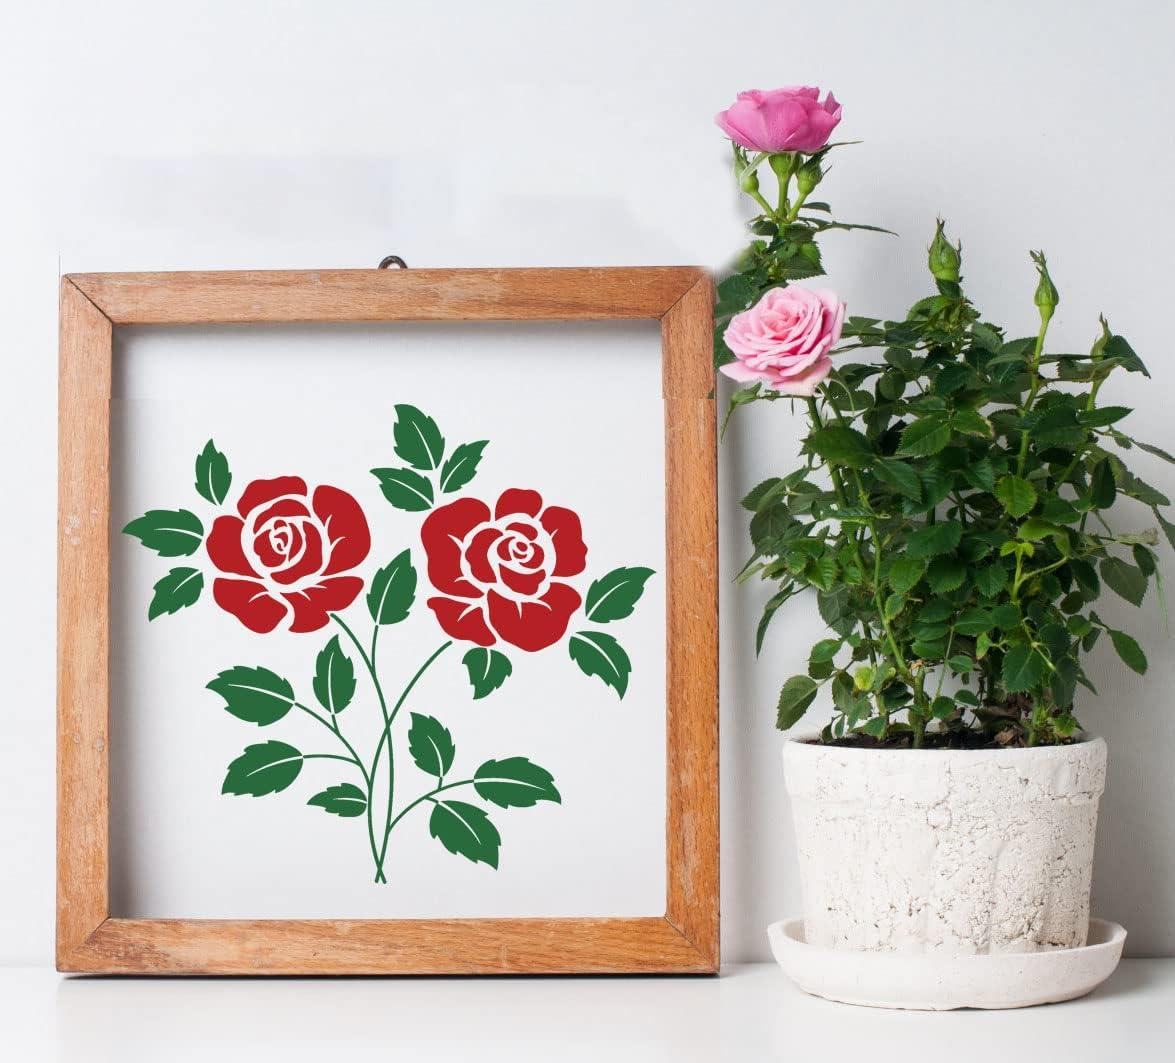 Wall Flowers Stencil Rose Pattern Reusable Paint Art Diy Crafts